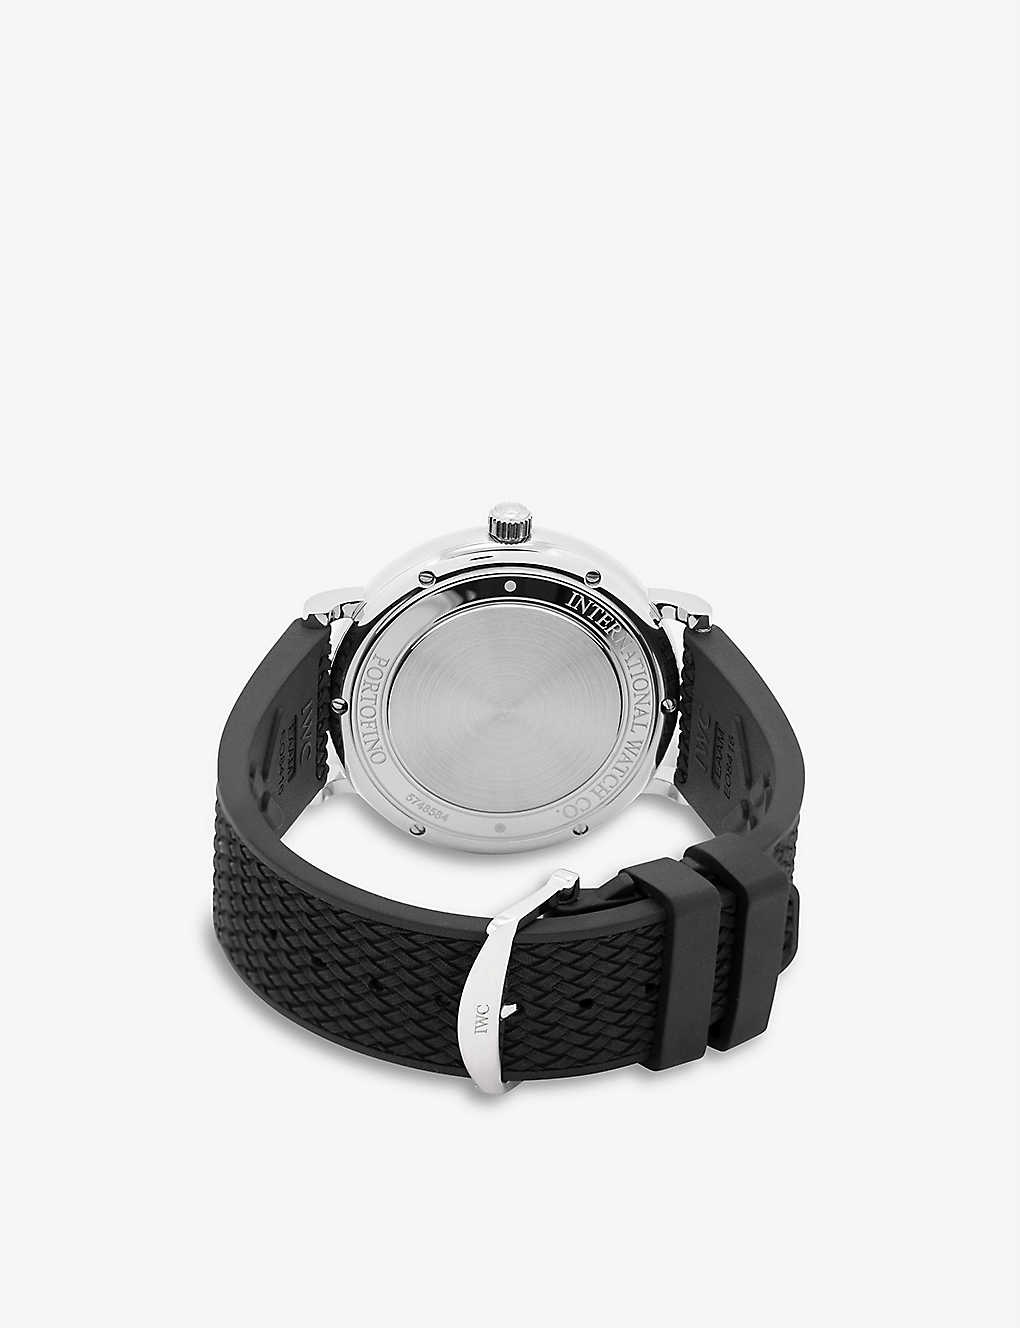 IW356502 Portofino stainless steel automatic watch - 3